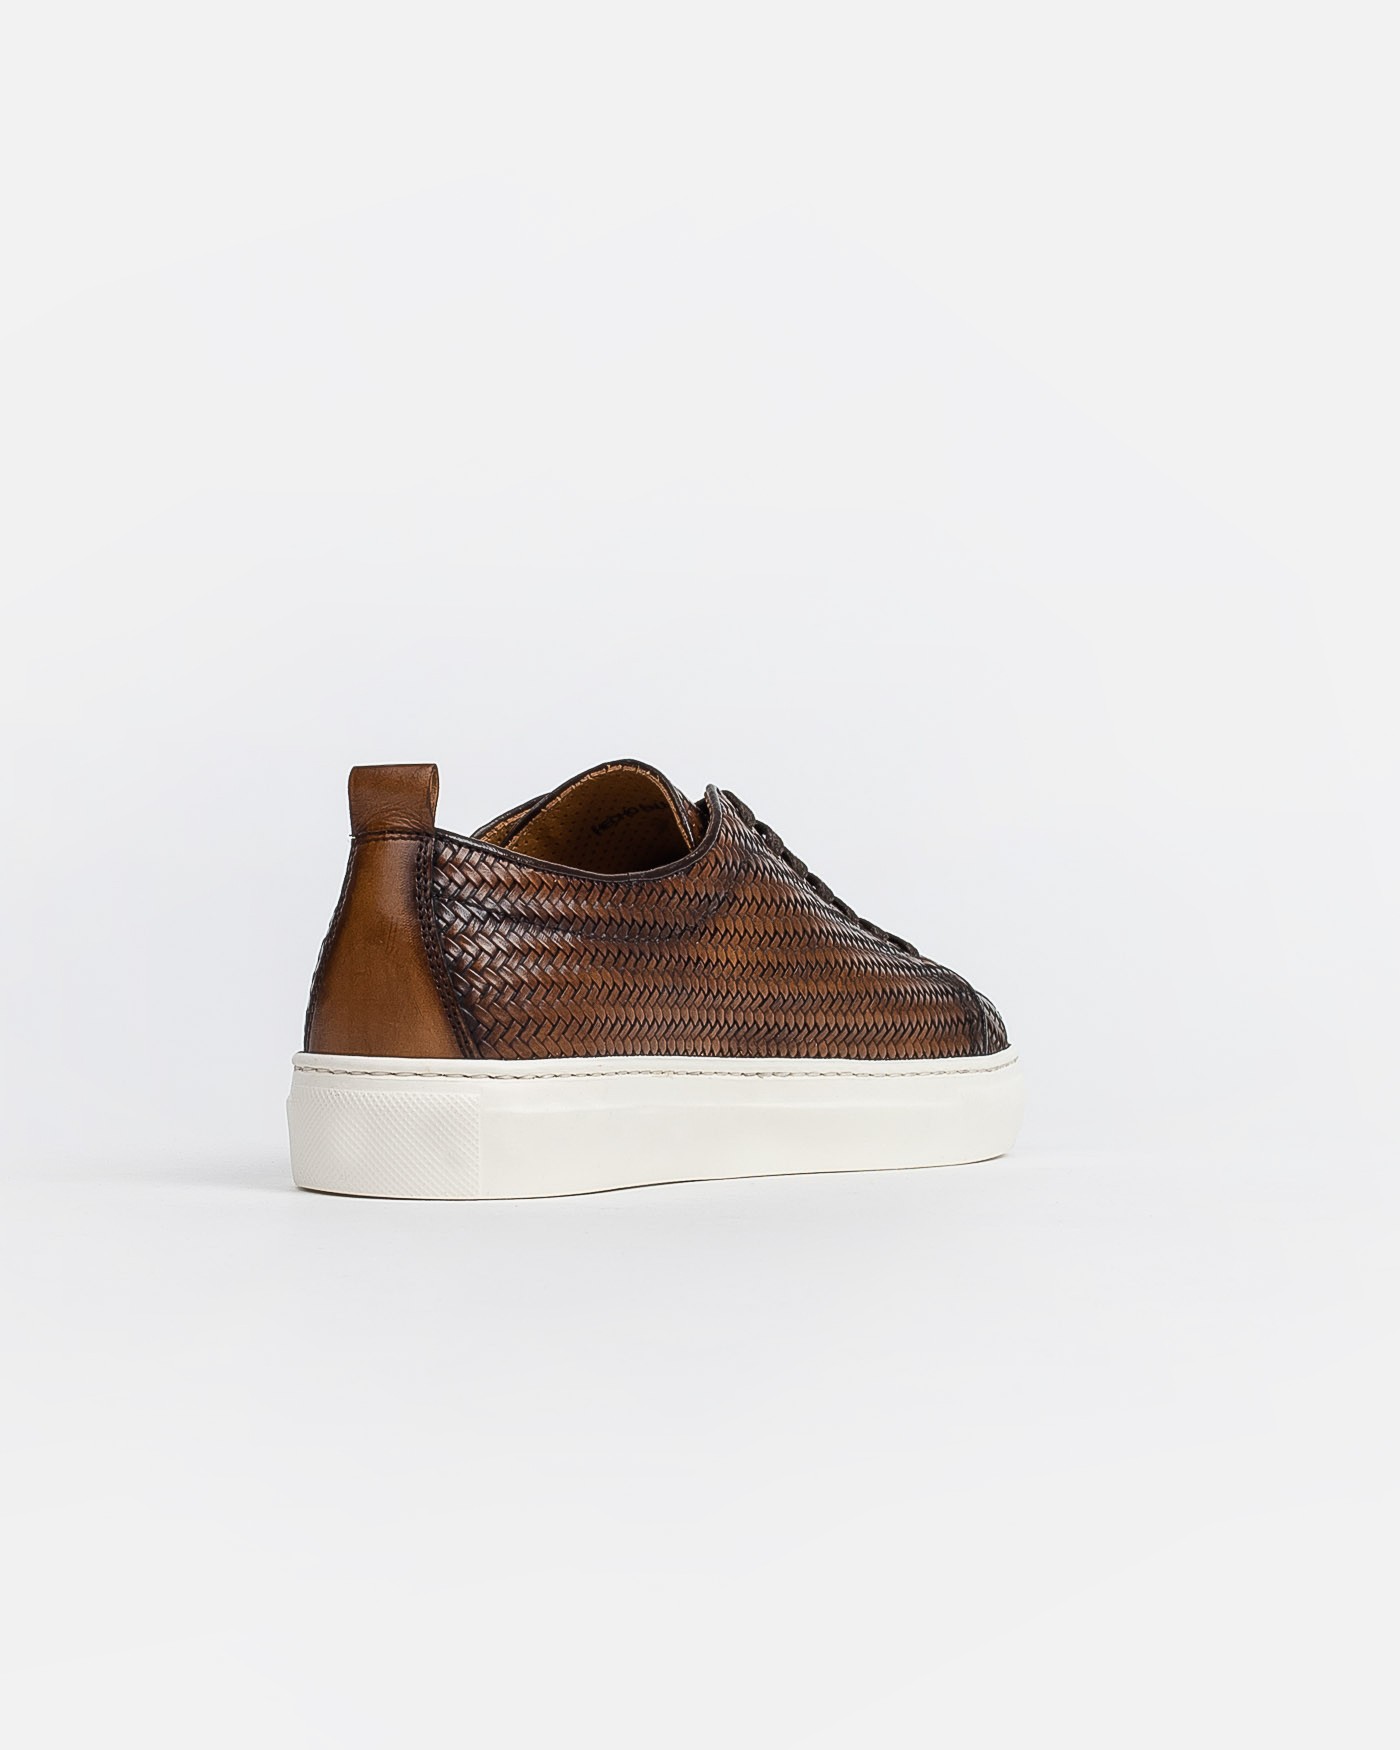 calce-zapatillas-magnum-gold-sneakers-brown-marron (2)